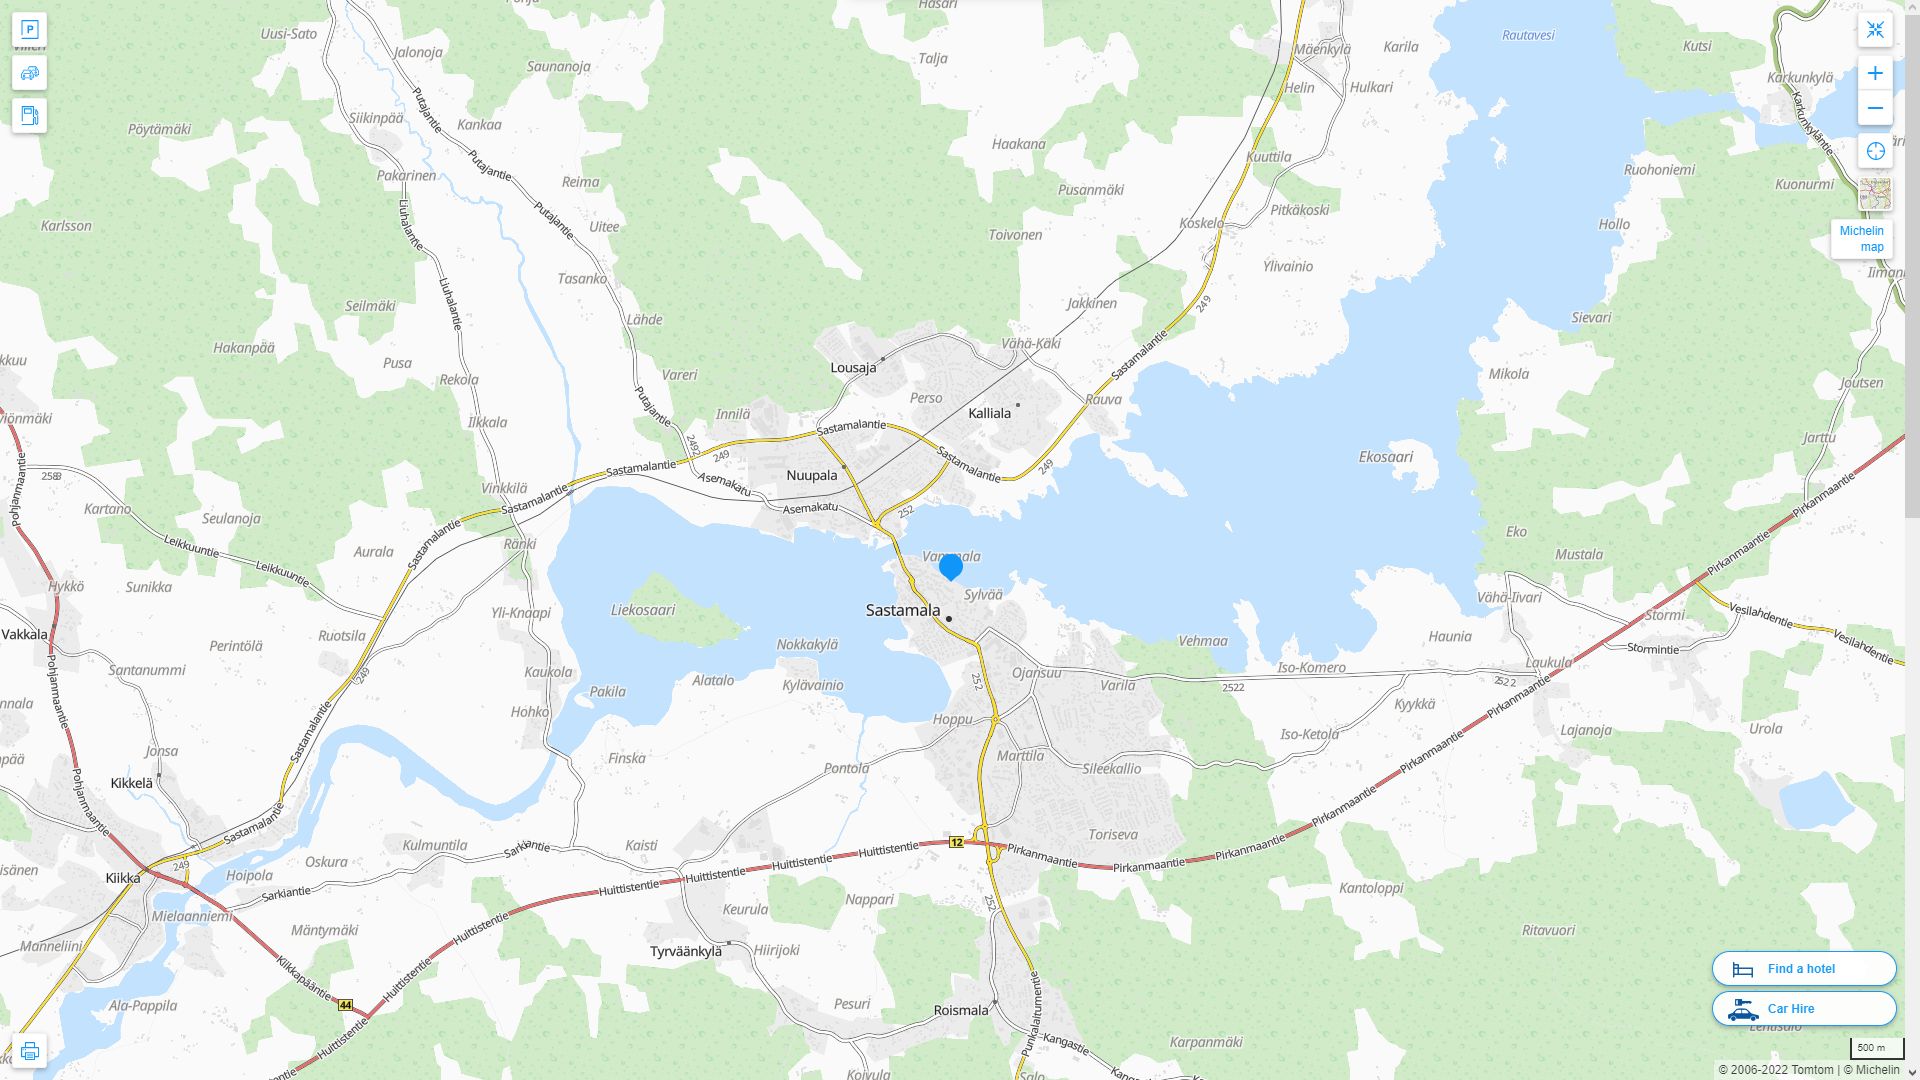 Vammala Finlande Autoroute et carte routiere